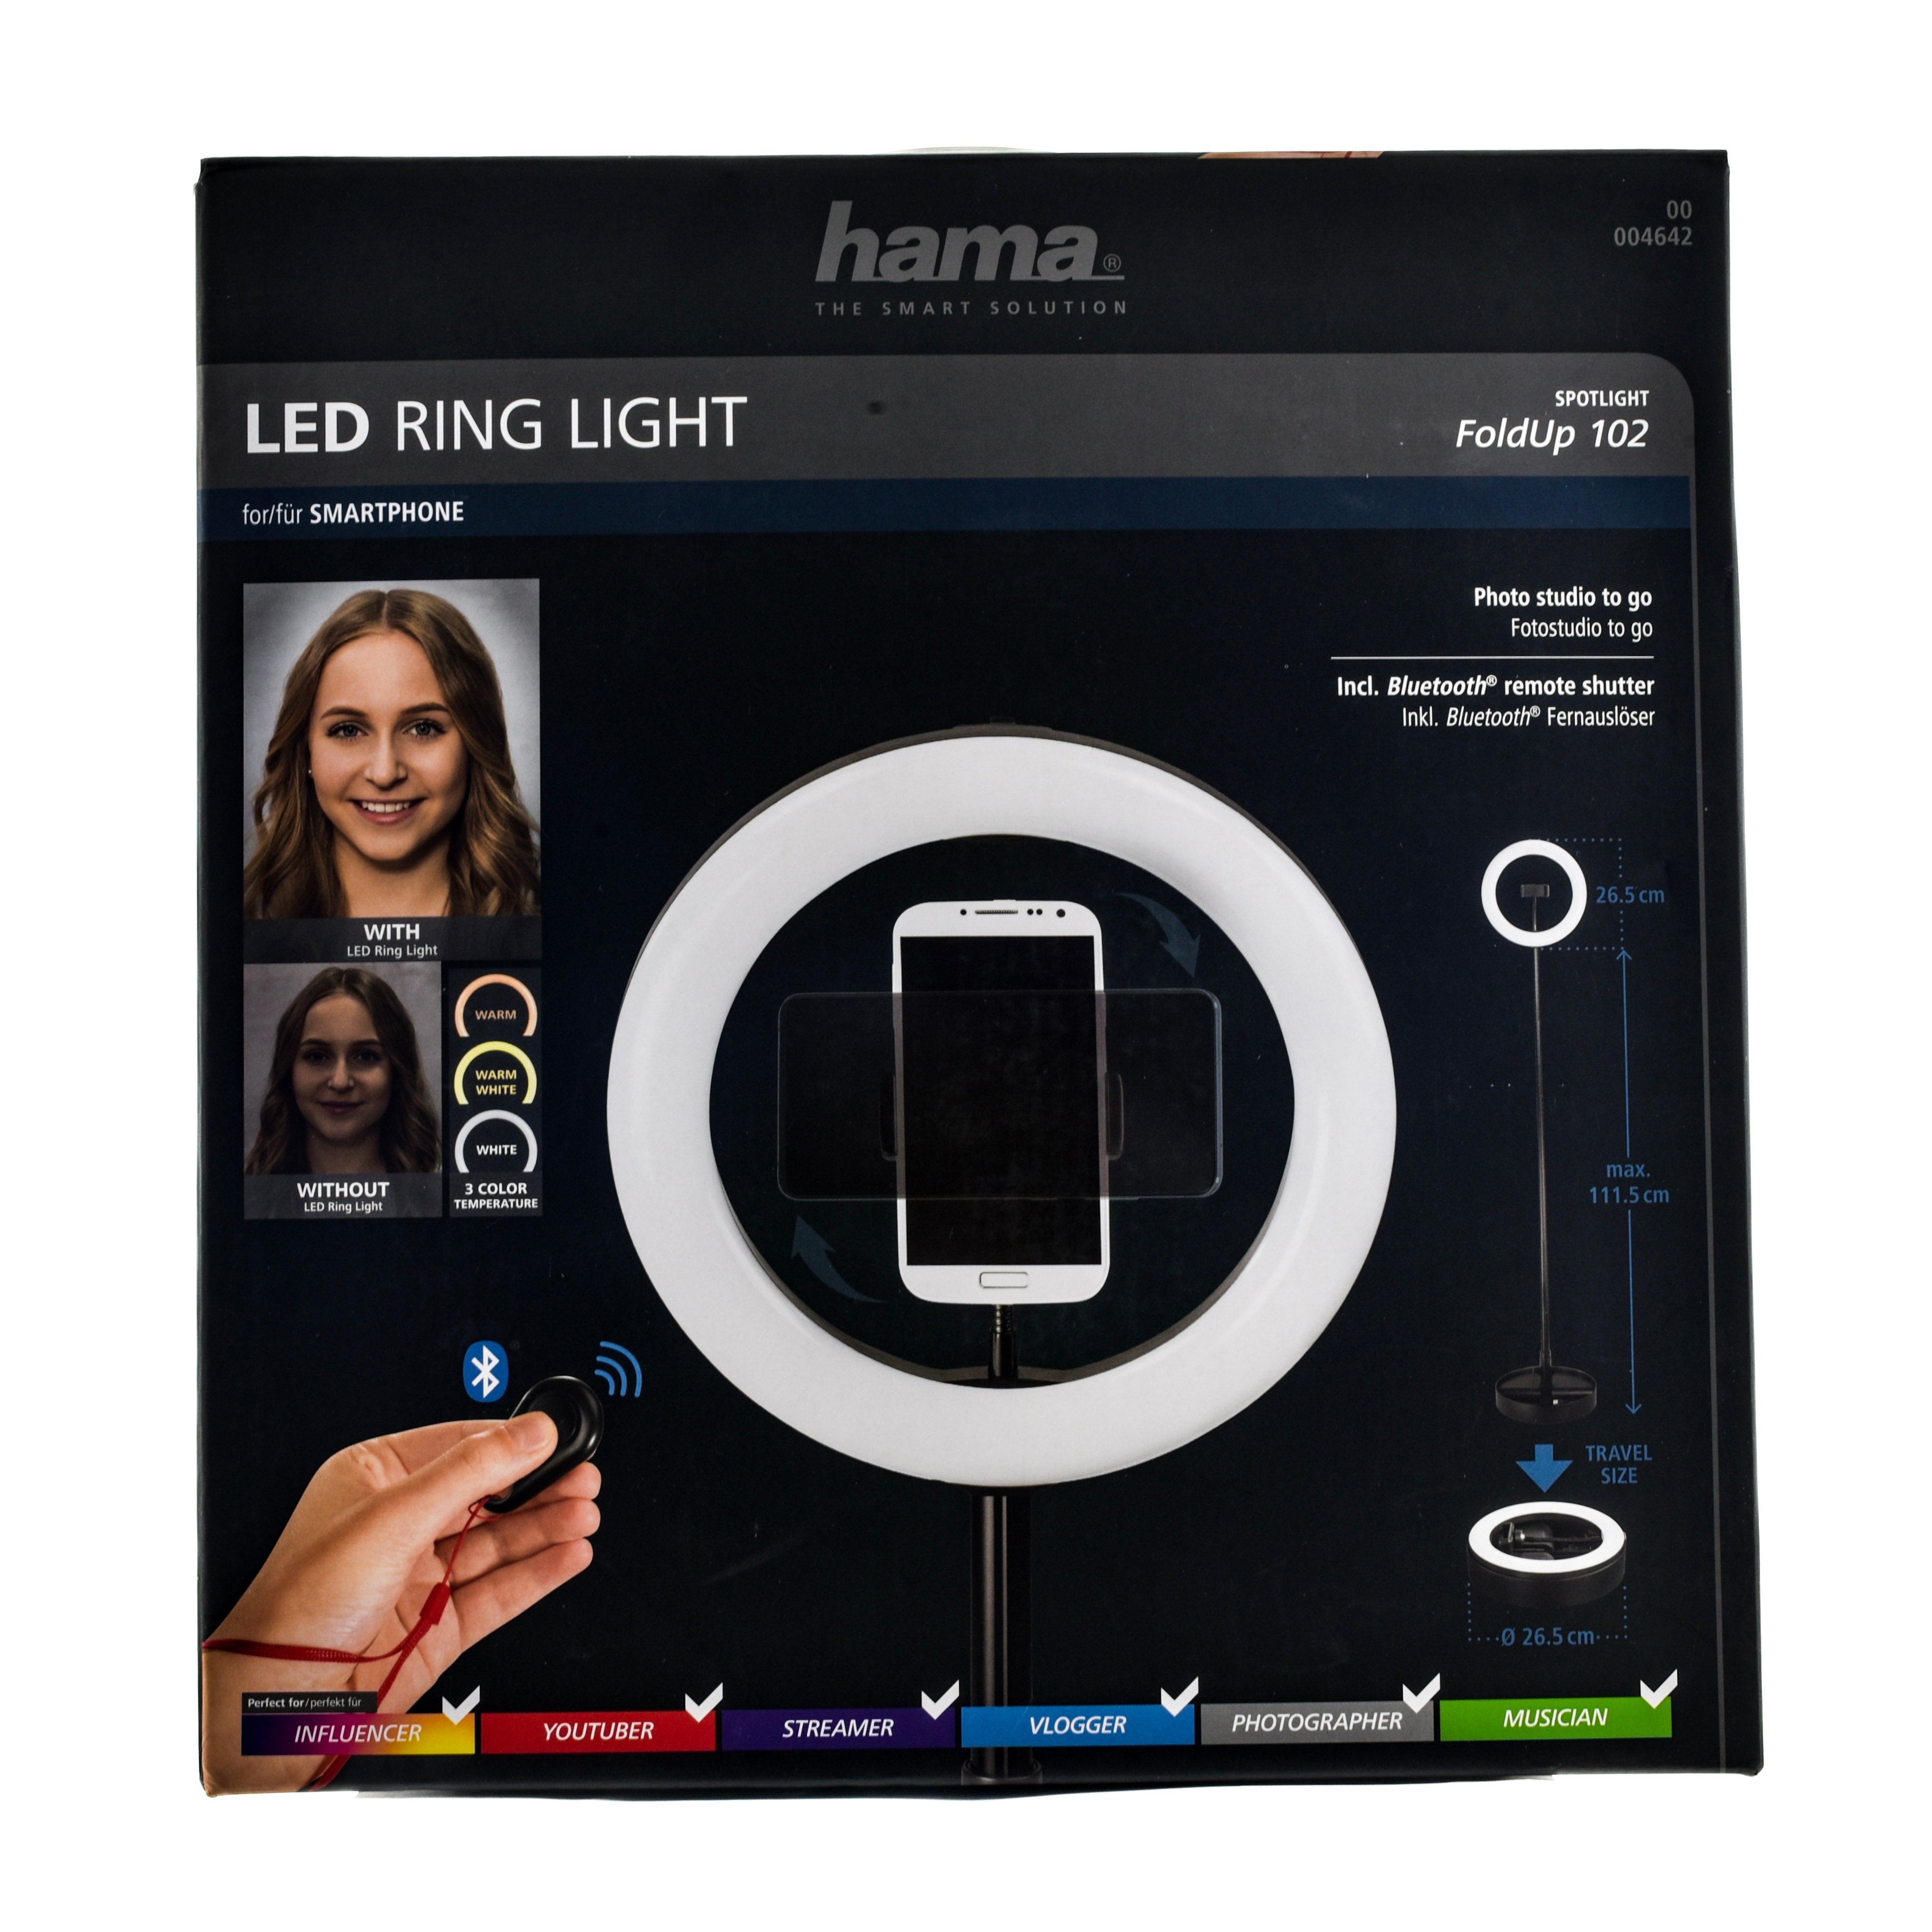 Hama LED Ring Light Spotlight Foldup 120